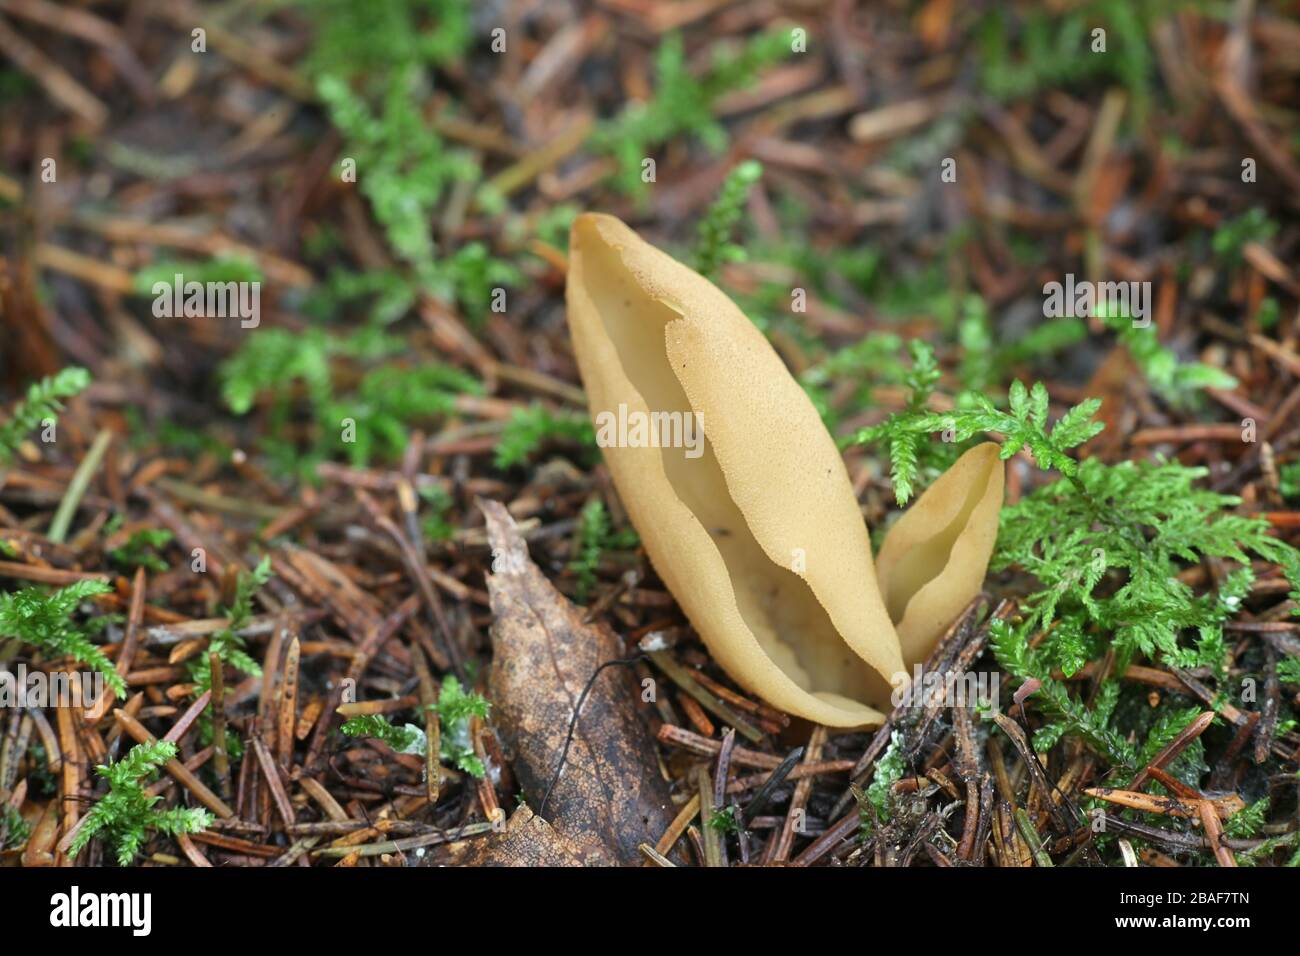 Otidea tuomikoskii, known as a Split goblet or rabbit ear fungus, growing wild in Finland Stock Photo